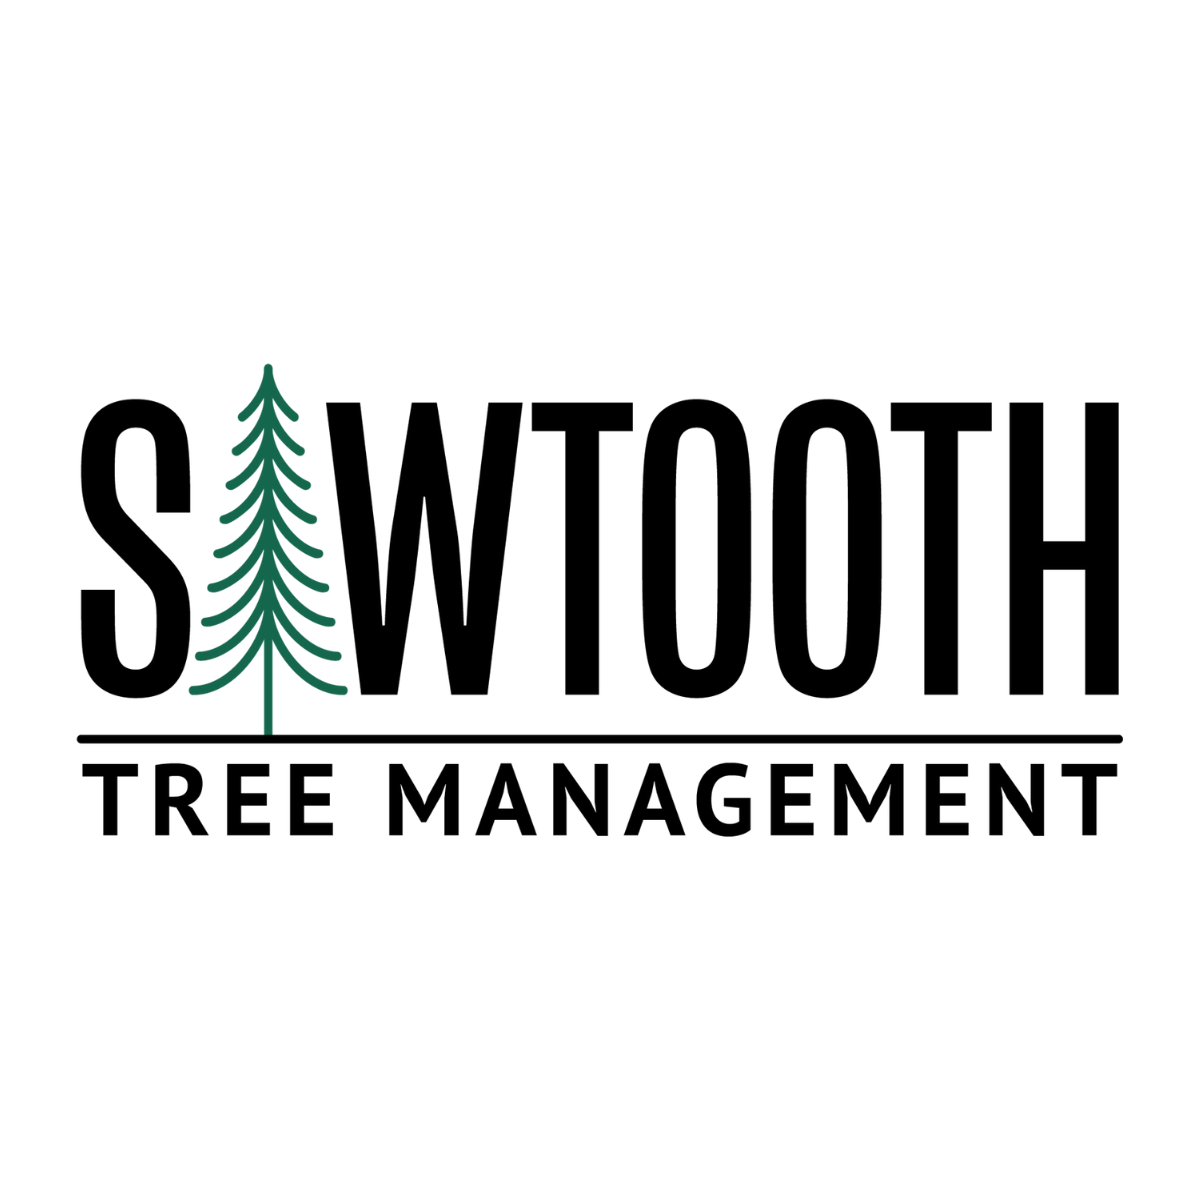 Sawtooth Tree Management